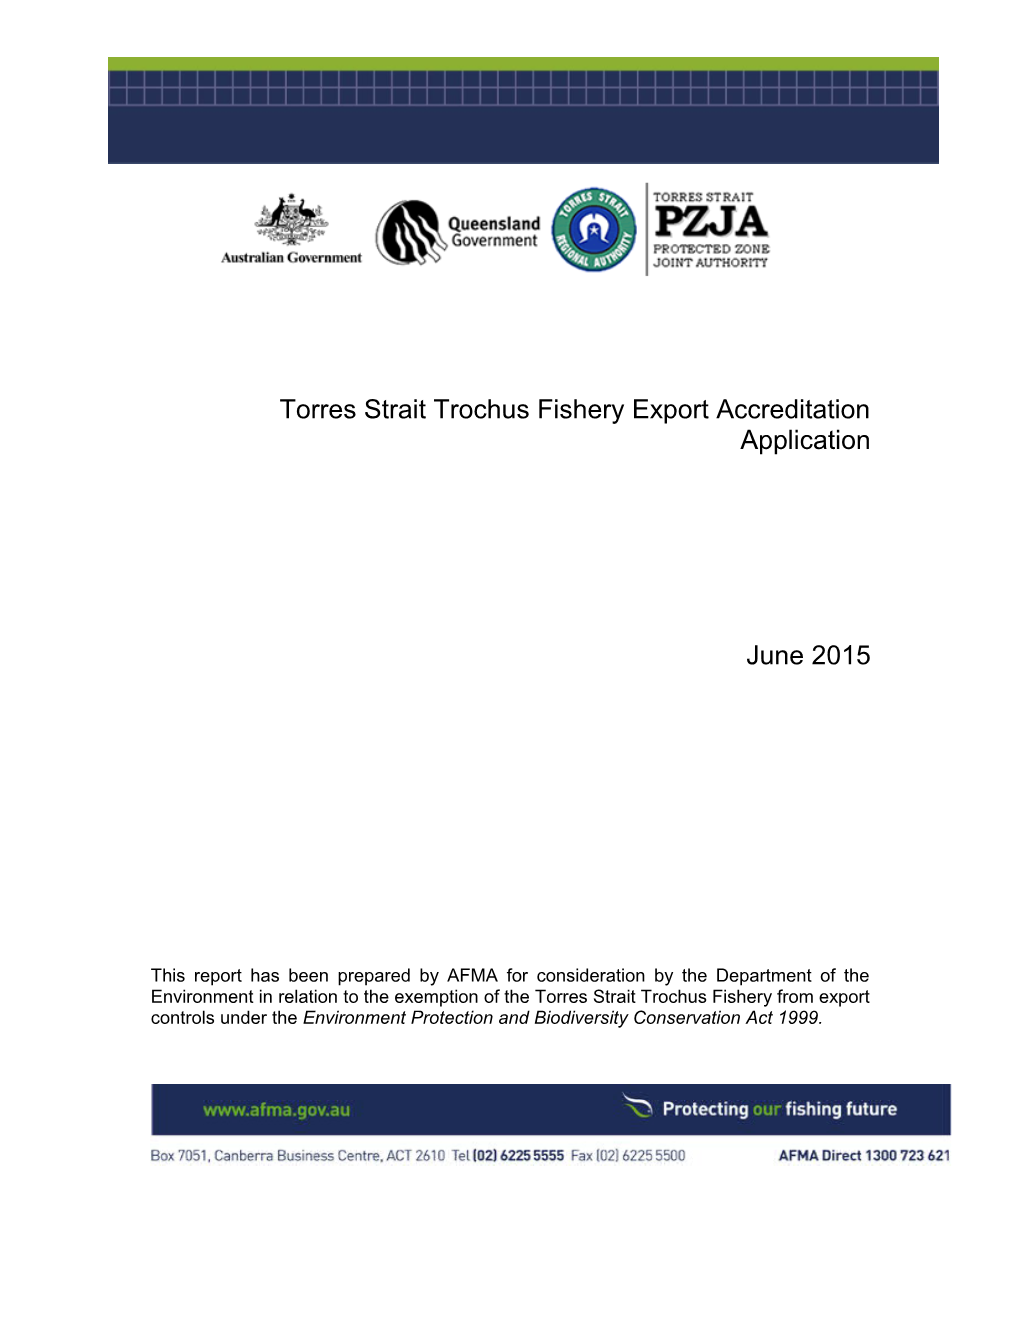 Torres Strait Trochus Fishery Export Accreditation Application